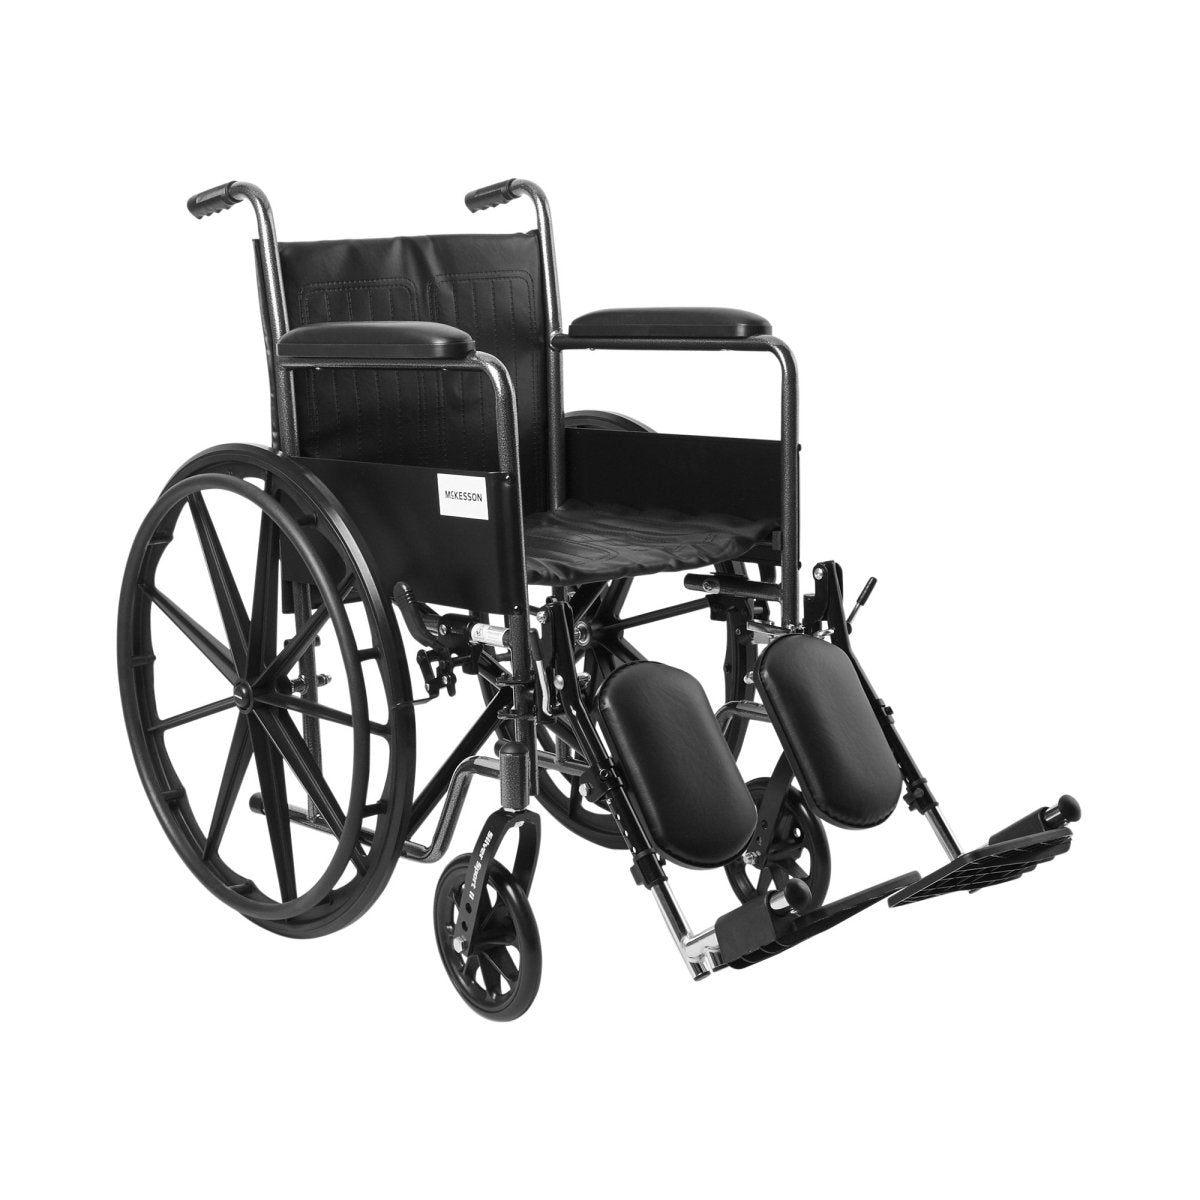 McKesson Dual Axle Wheelchair Full Length Arm Swing-Away Elevating Footrest - 1065275_EA - 2